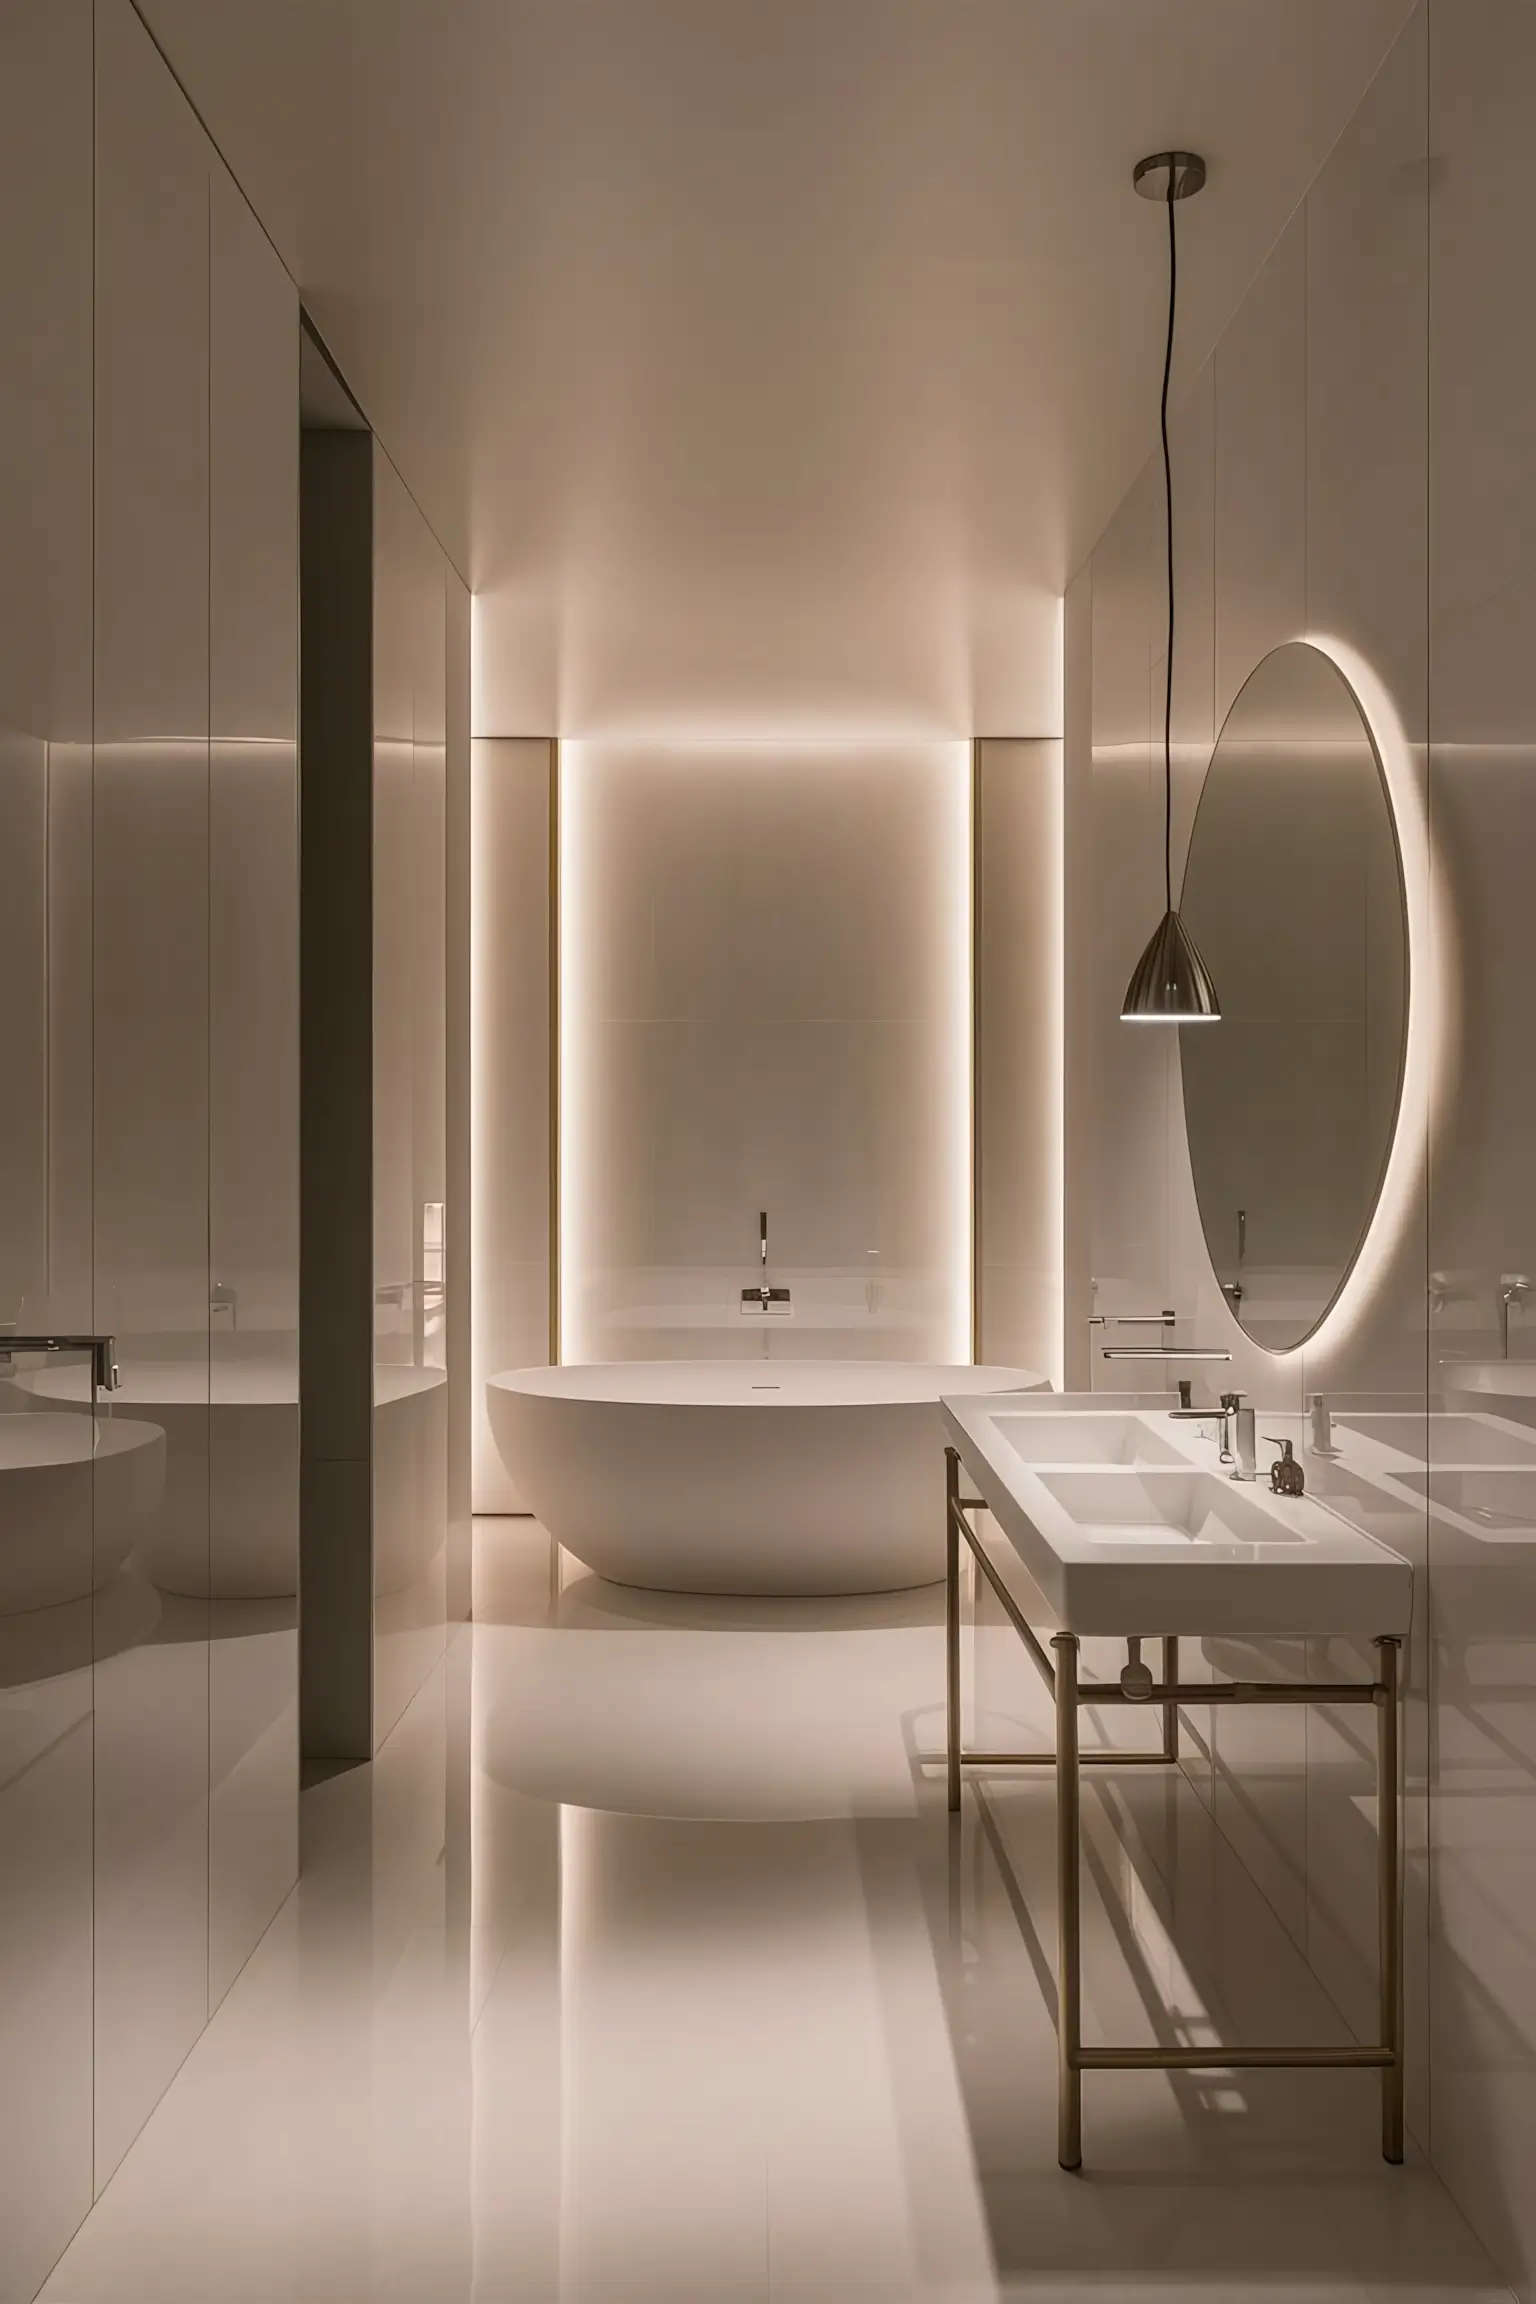 Sleek, modern bathroom with minimalist design and high-end fixtures.